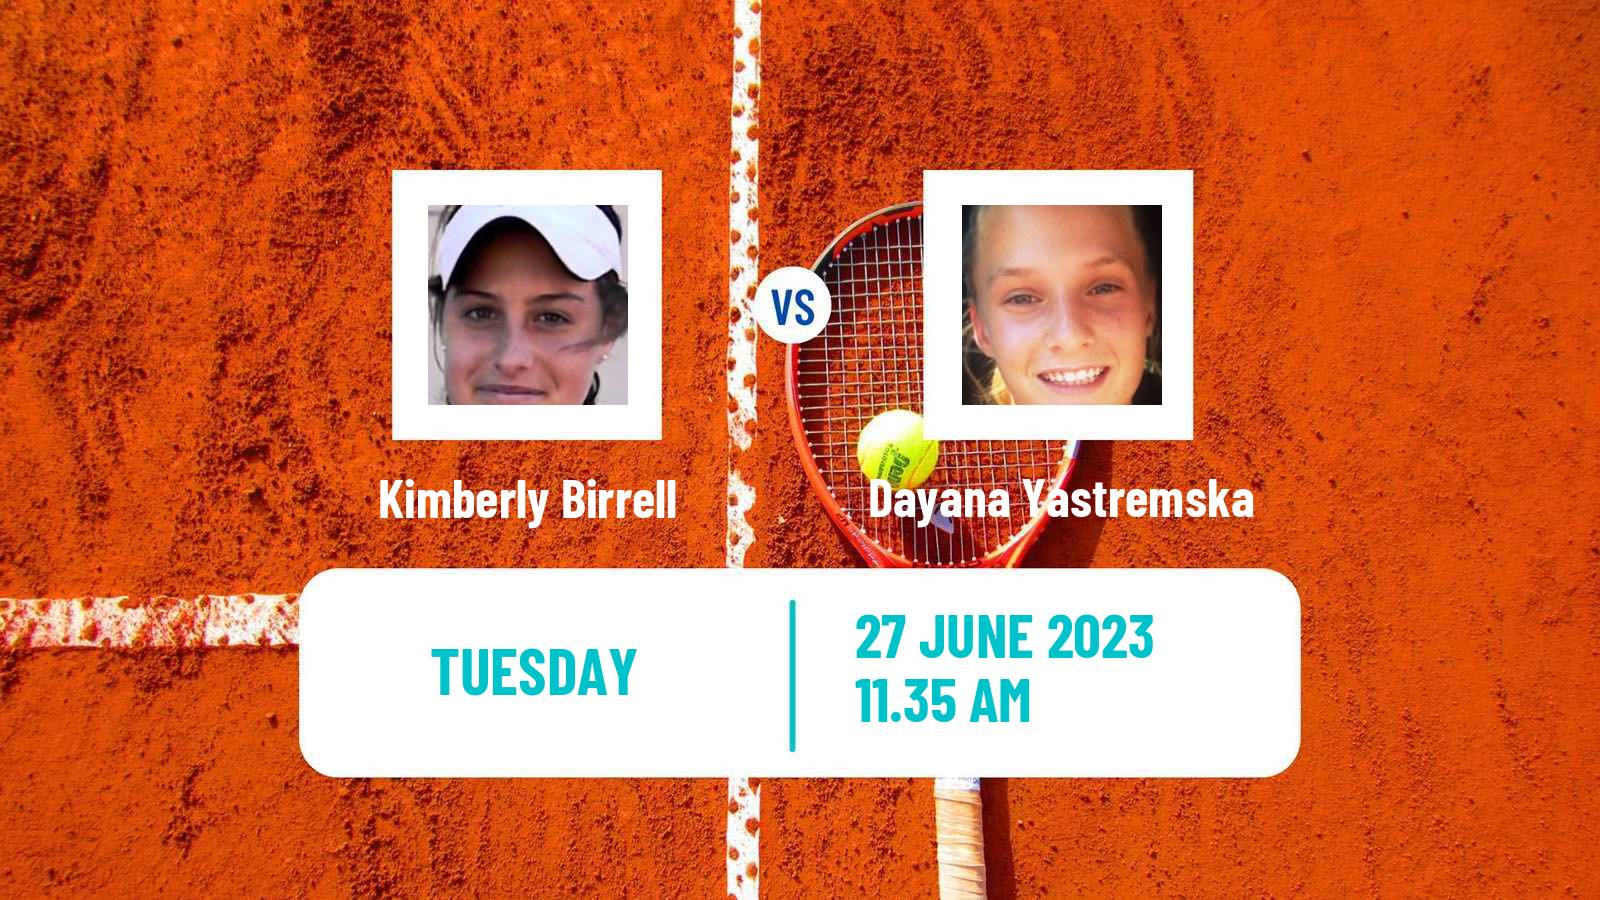 Tennis WTA Wimbledon Kimberly Birrell - Dayana Yastremska